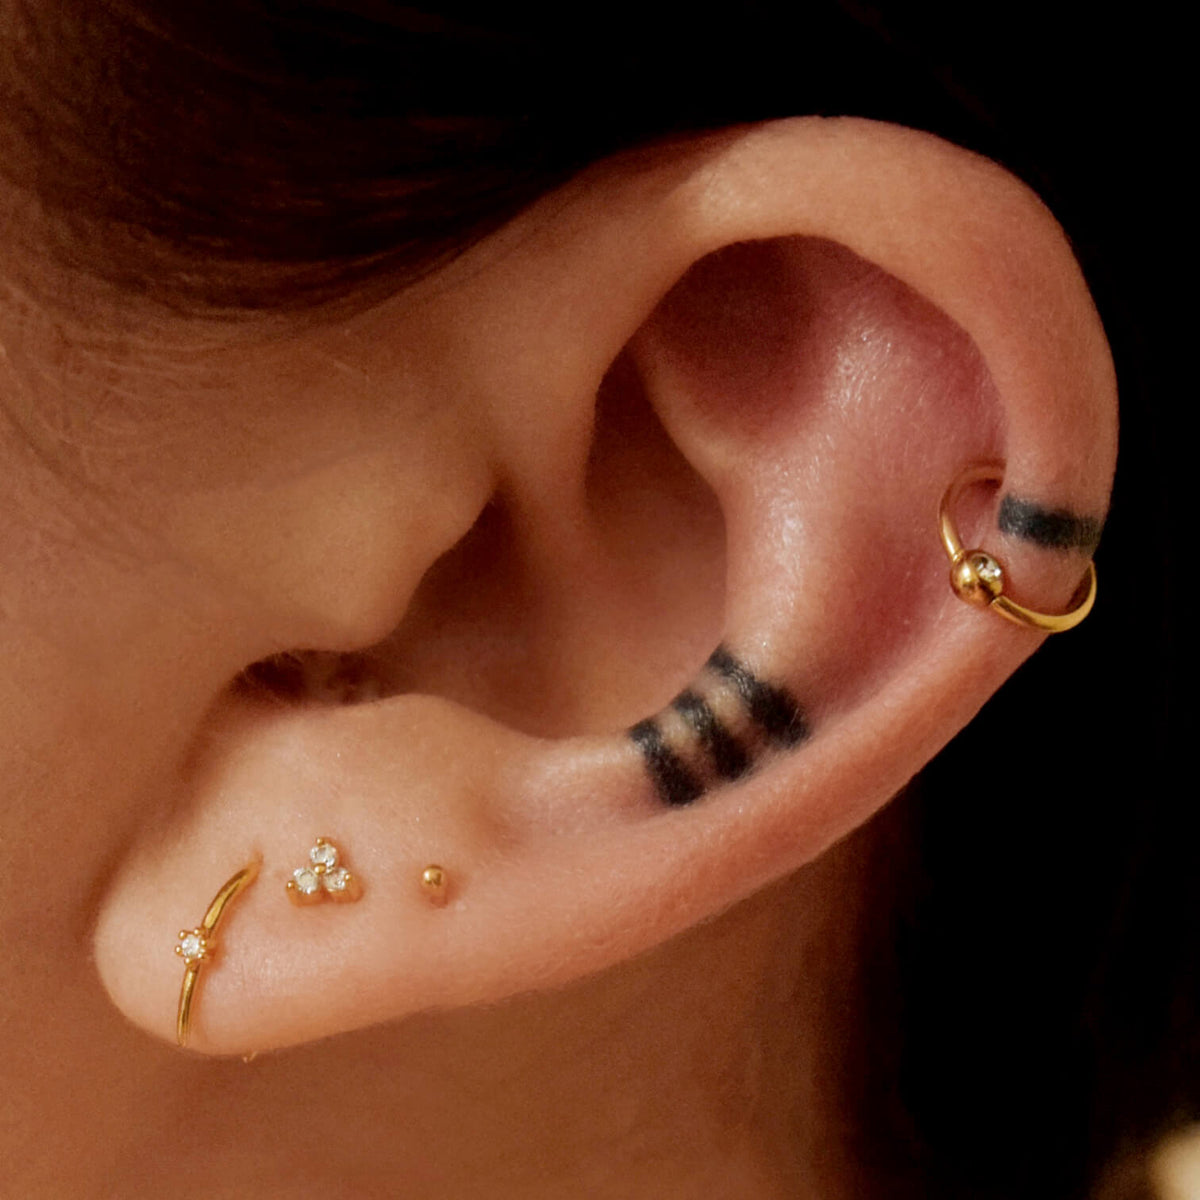 Cartilage Earrings - Studs, Hoops, Captives Earrings